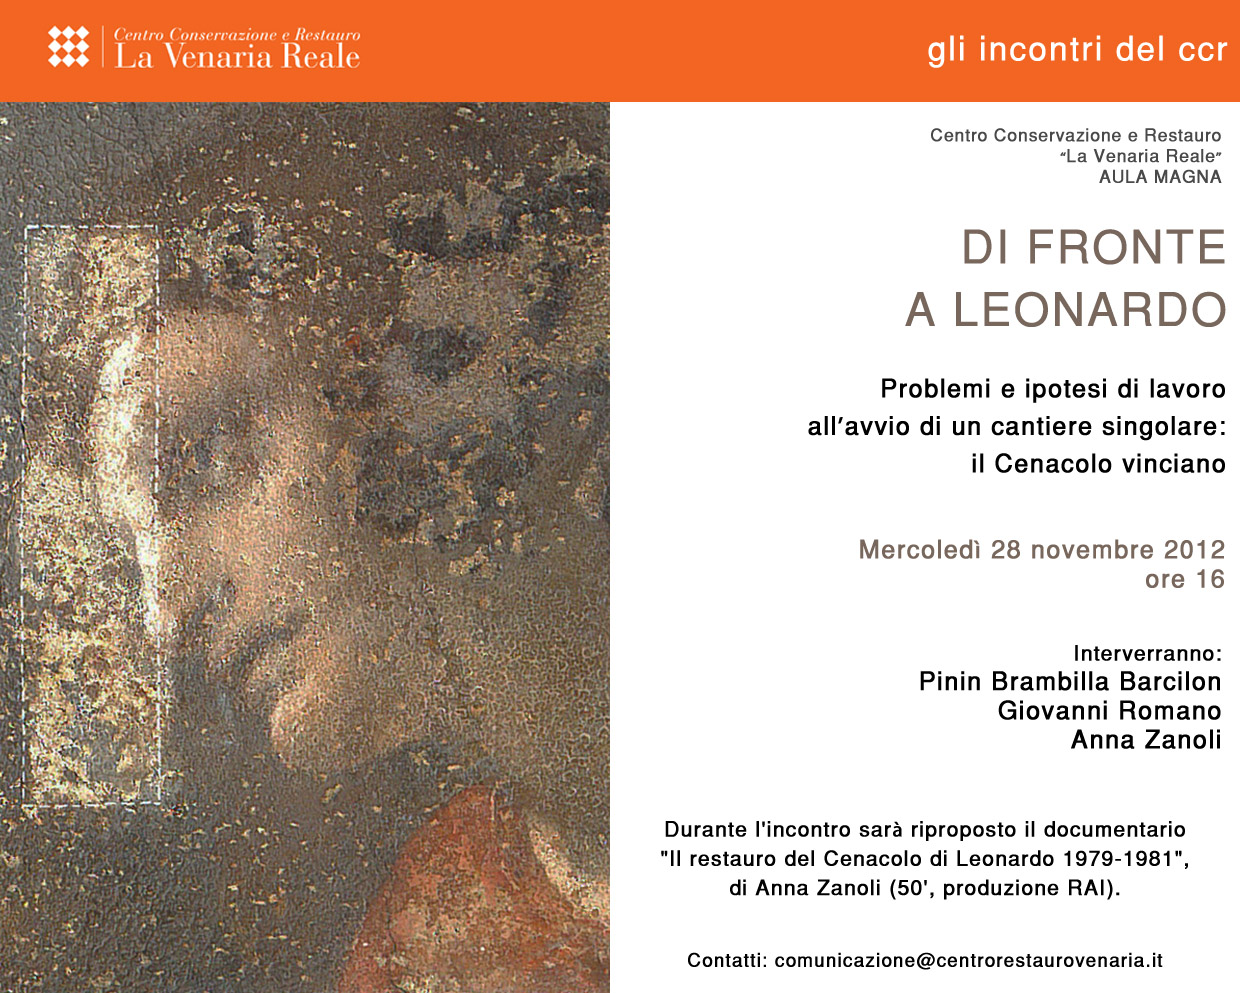 Di fronte a Leonardo convegno 28 nov 2012 Venaria.jpg